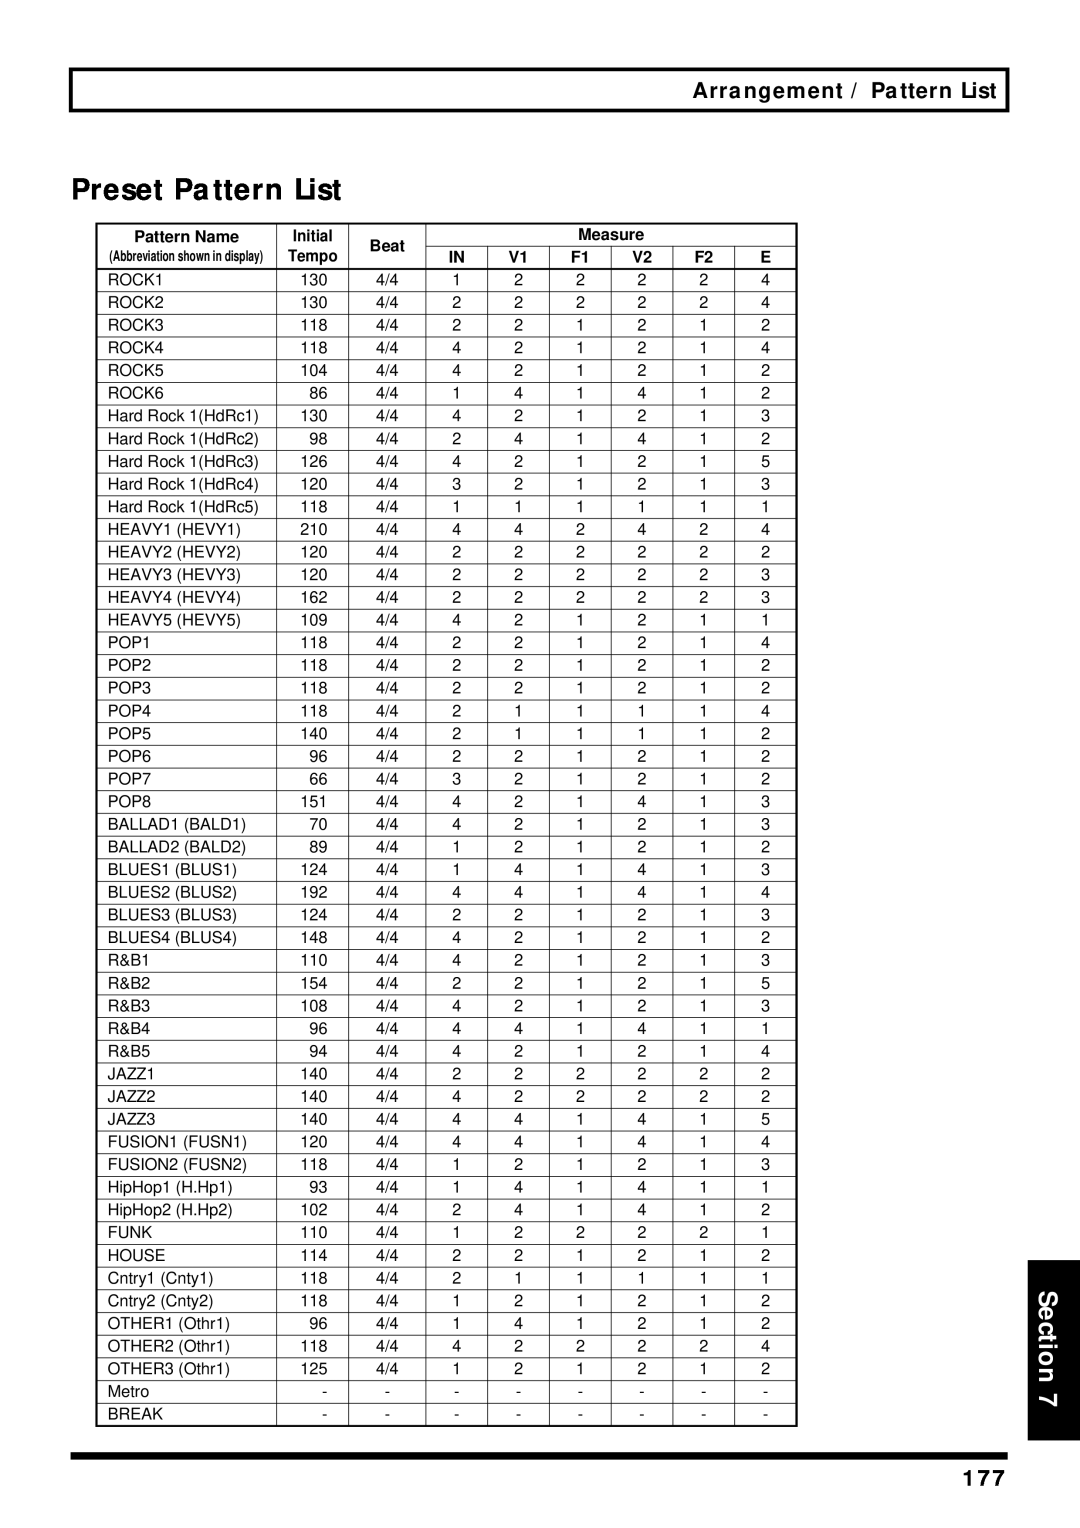 Roland BR-864 owner manual Preset Pattern List, Arrangement / Pattern List 